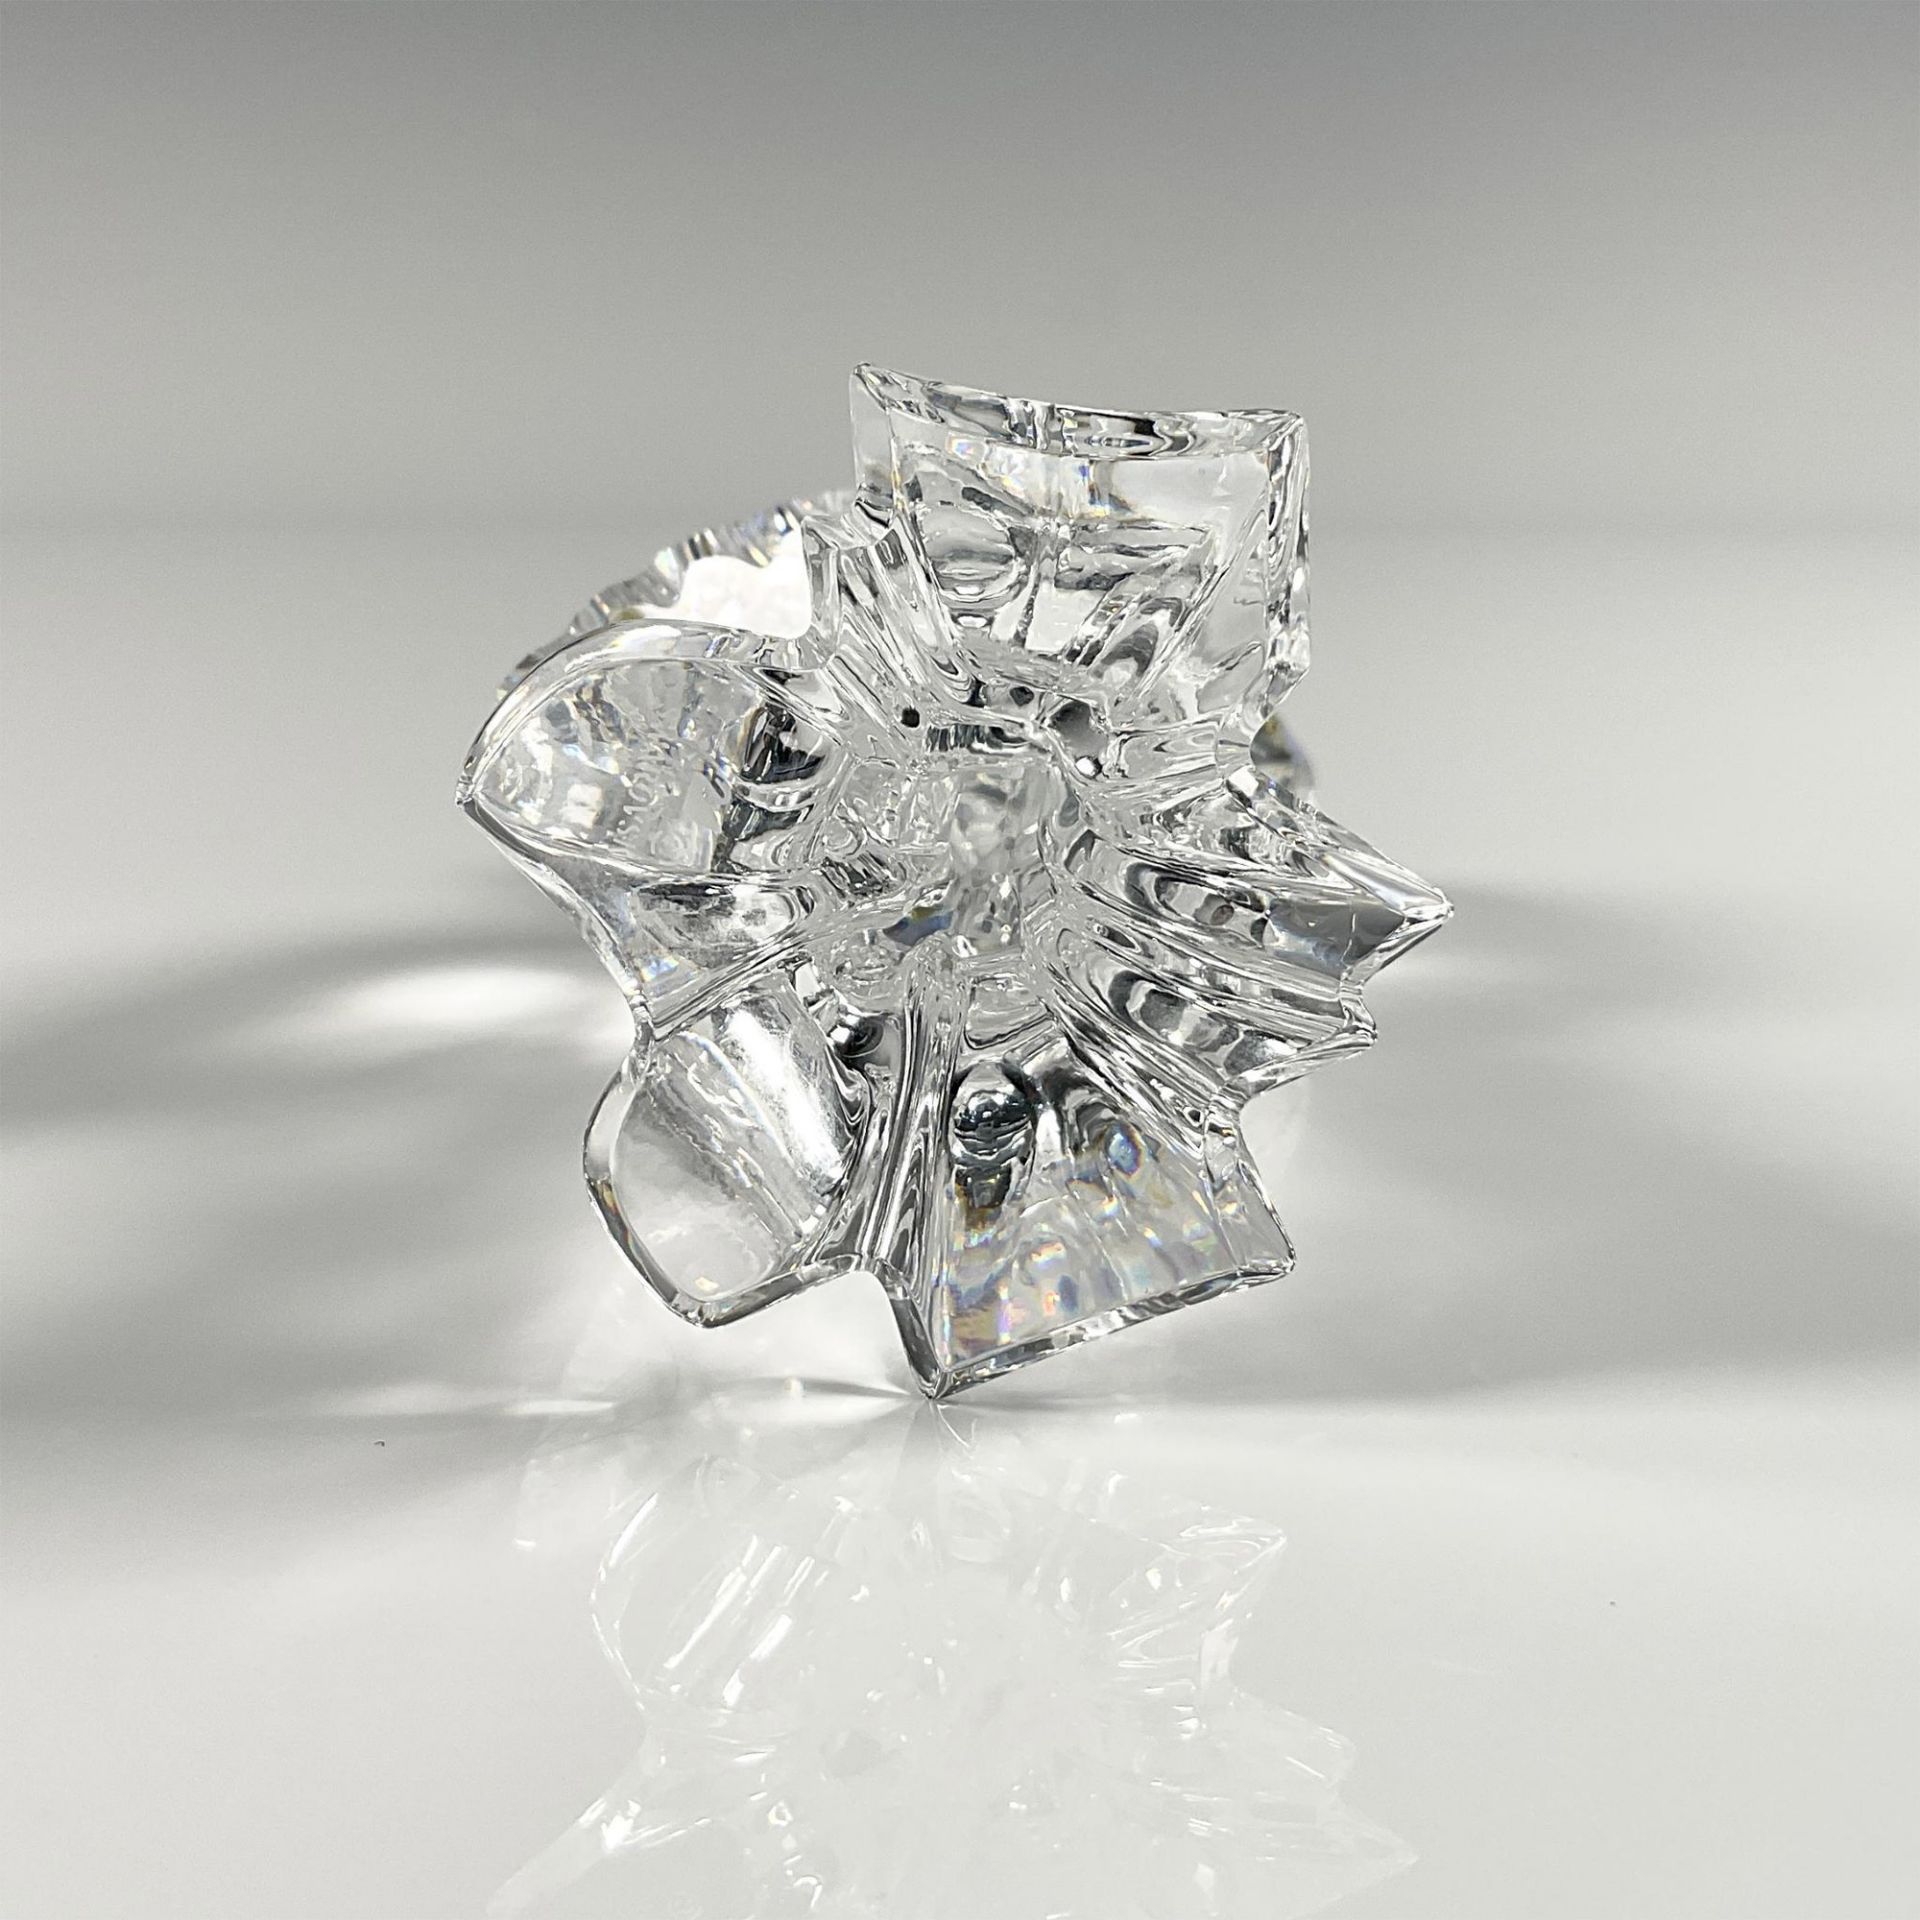 Swarovski Silver Crystal Figurine, Heron - Image 3 of 3